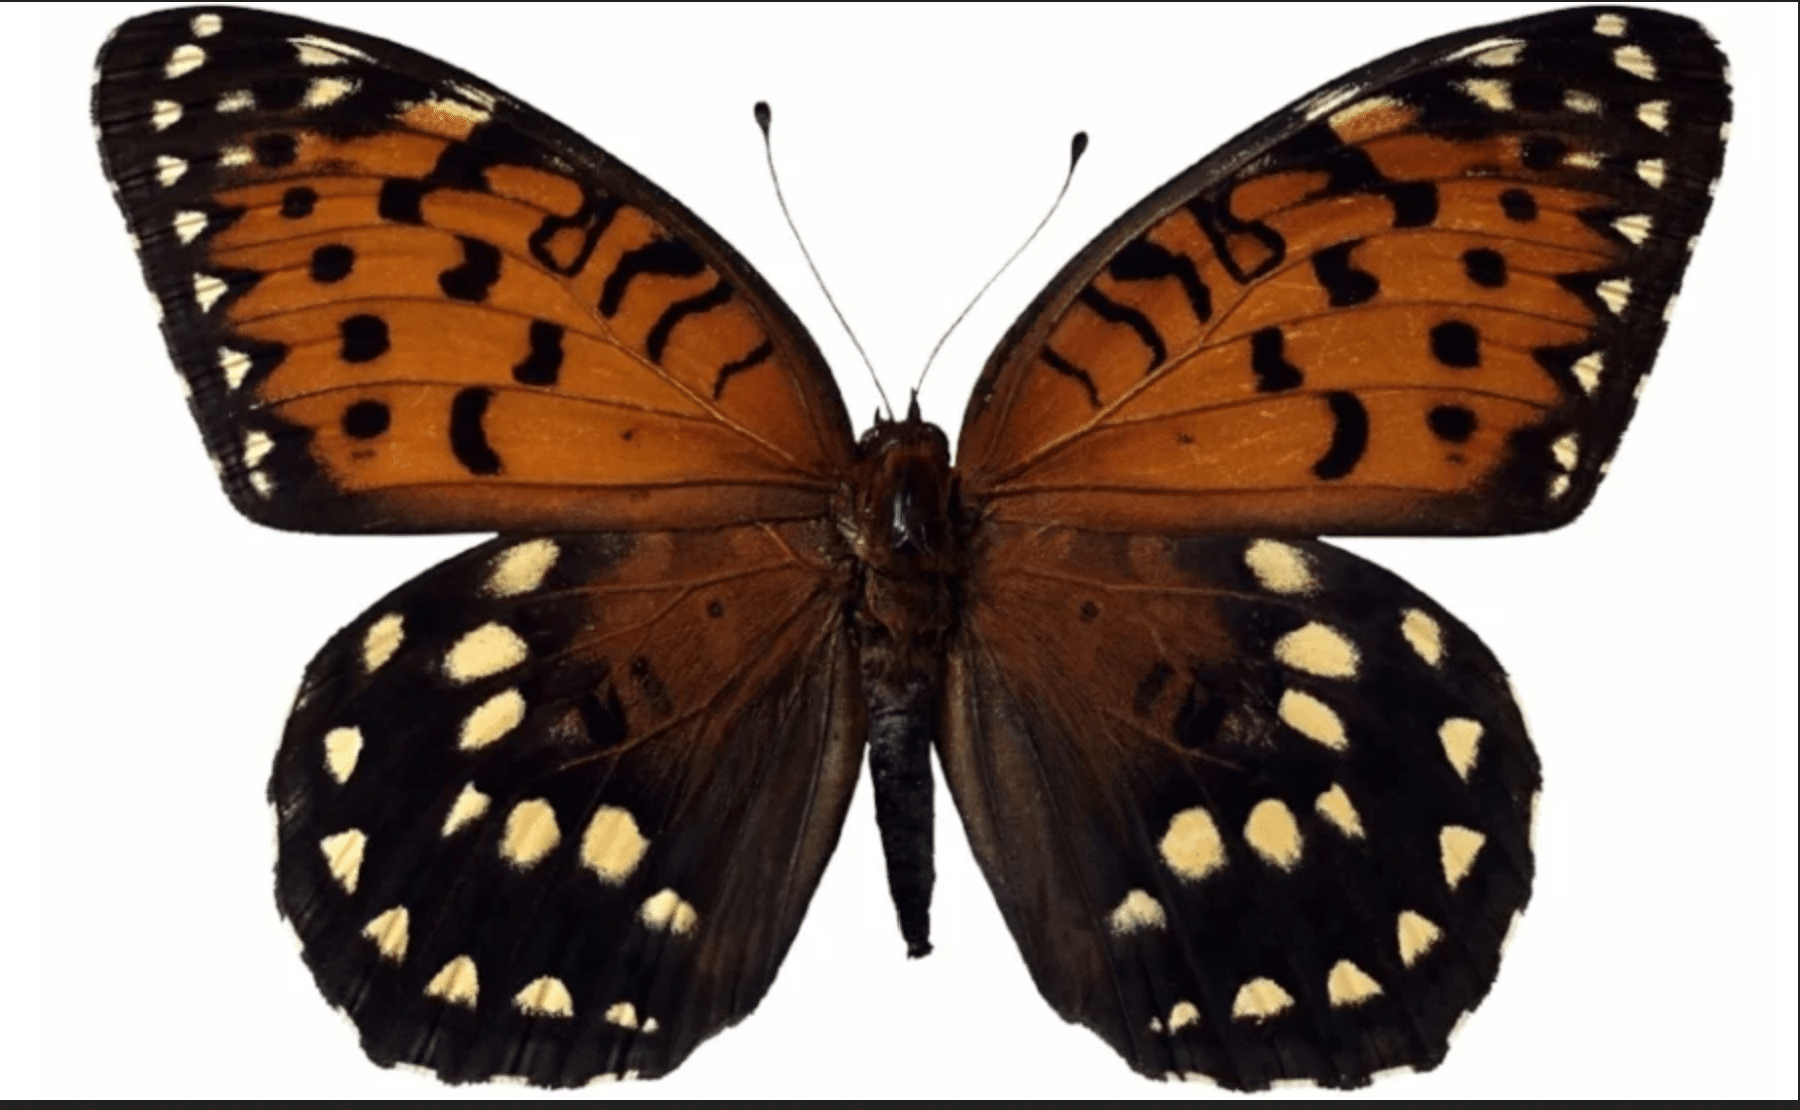 An image of a Regal Fritillary butterfly.